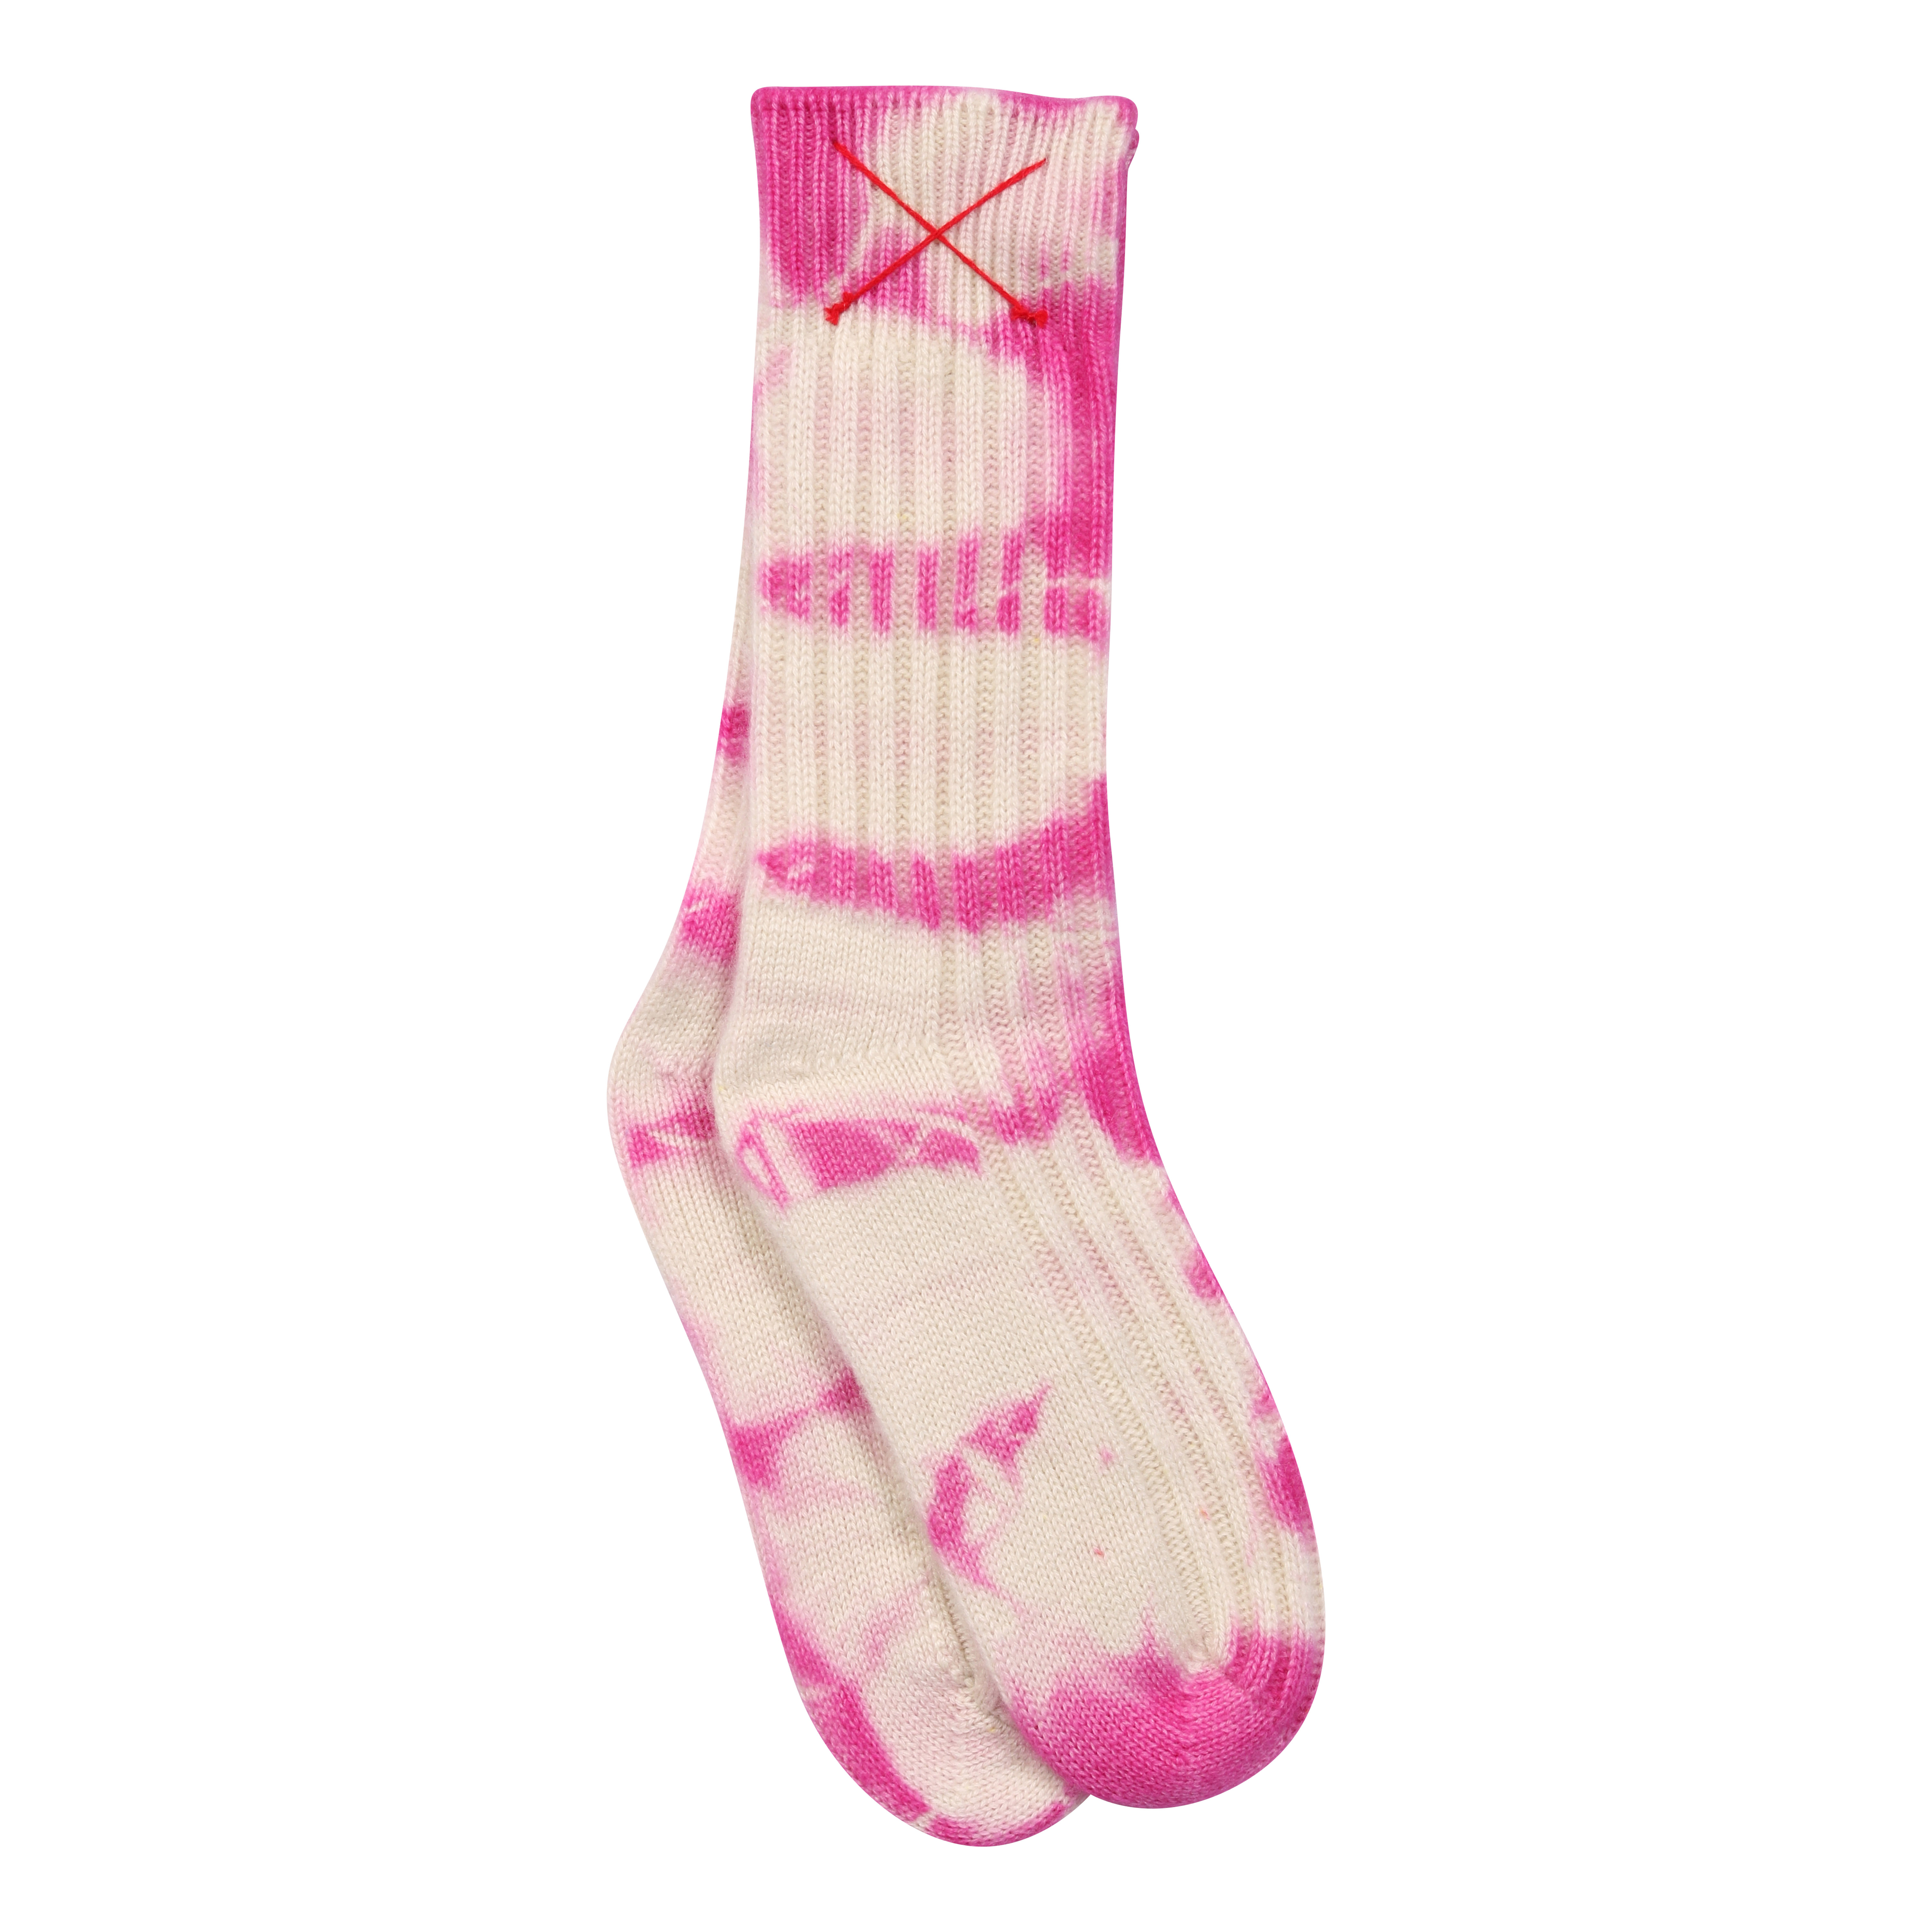 mell-o Cashmere Tie Dye Socks in Fuchsia S/35-38